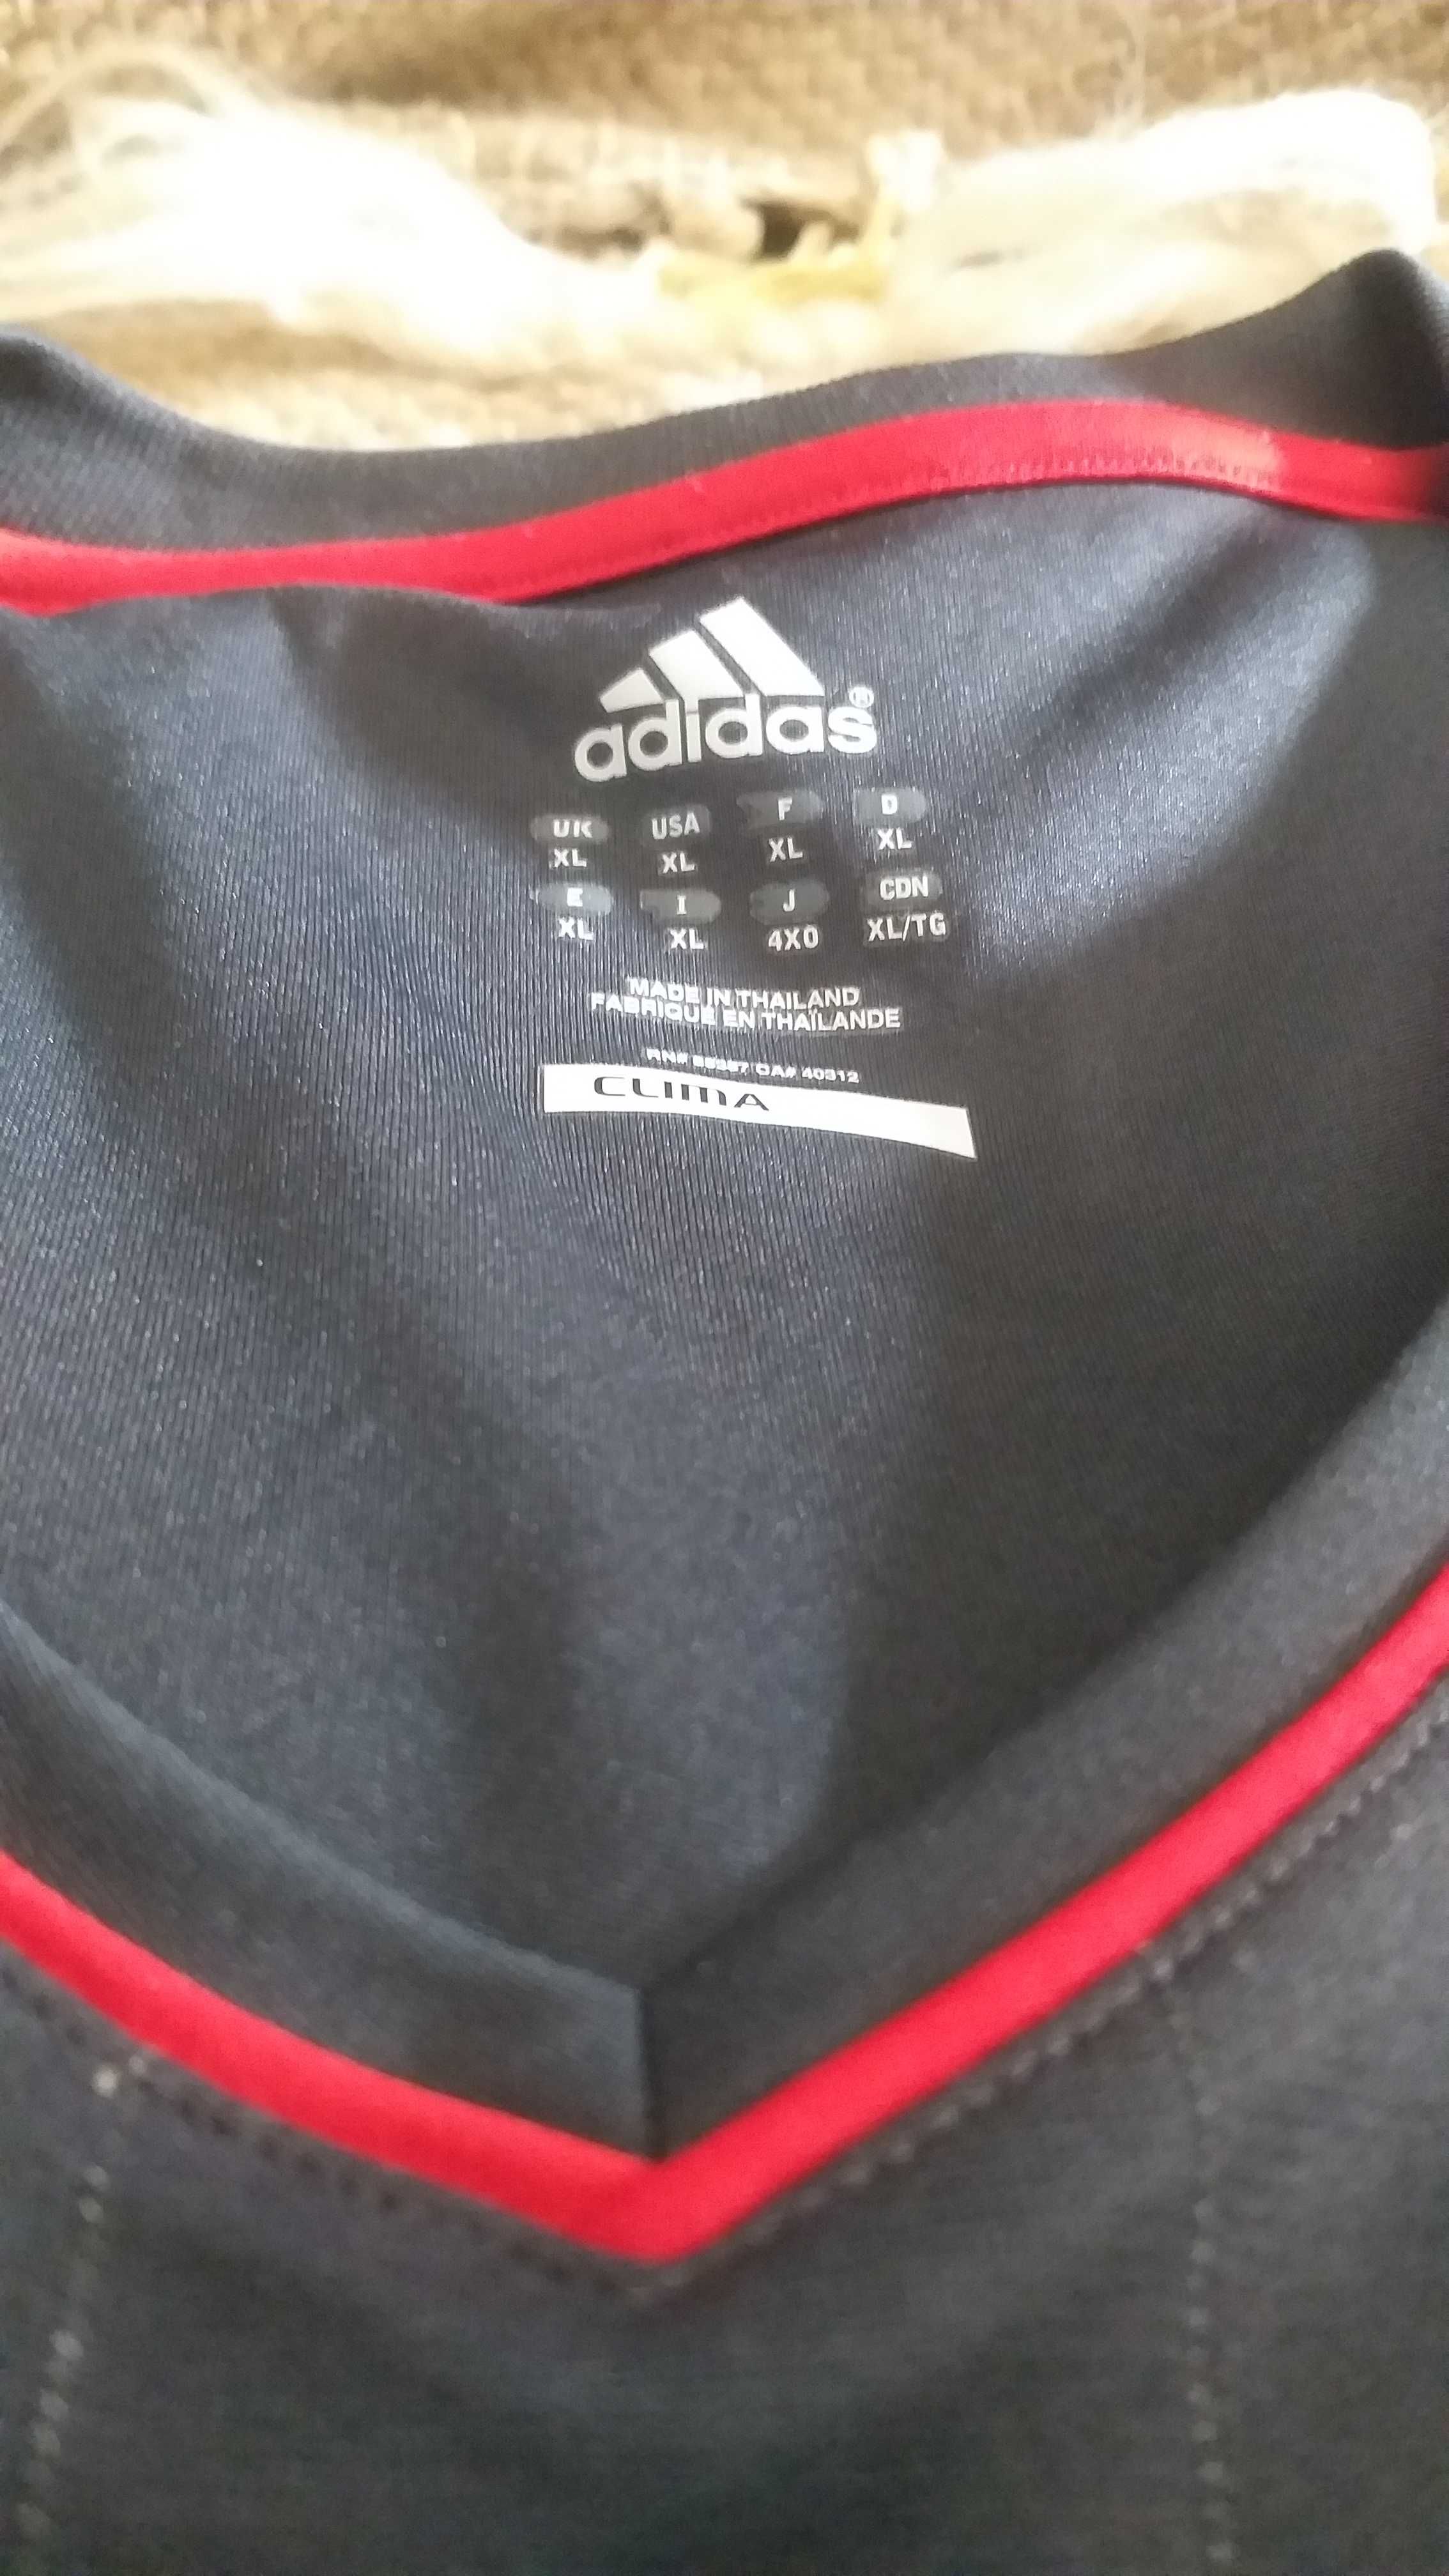 Оригиналнa тенискa на Liverpool - Adidas XL размер